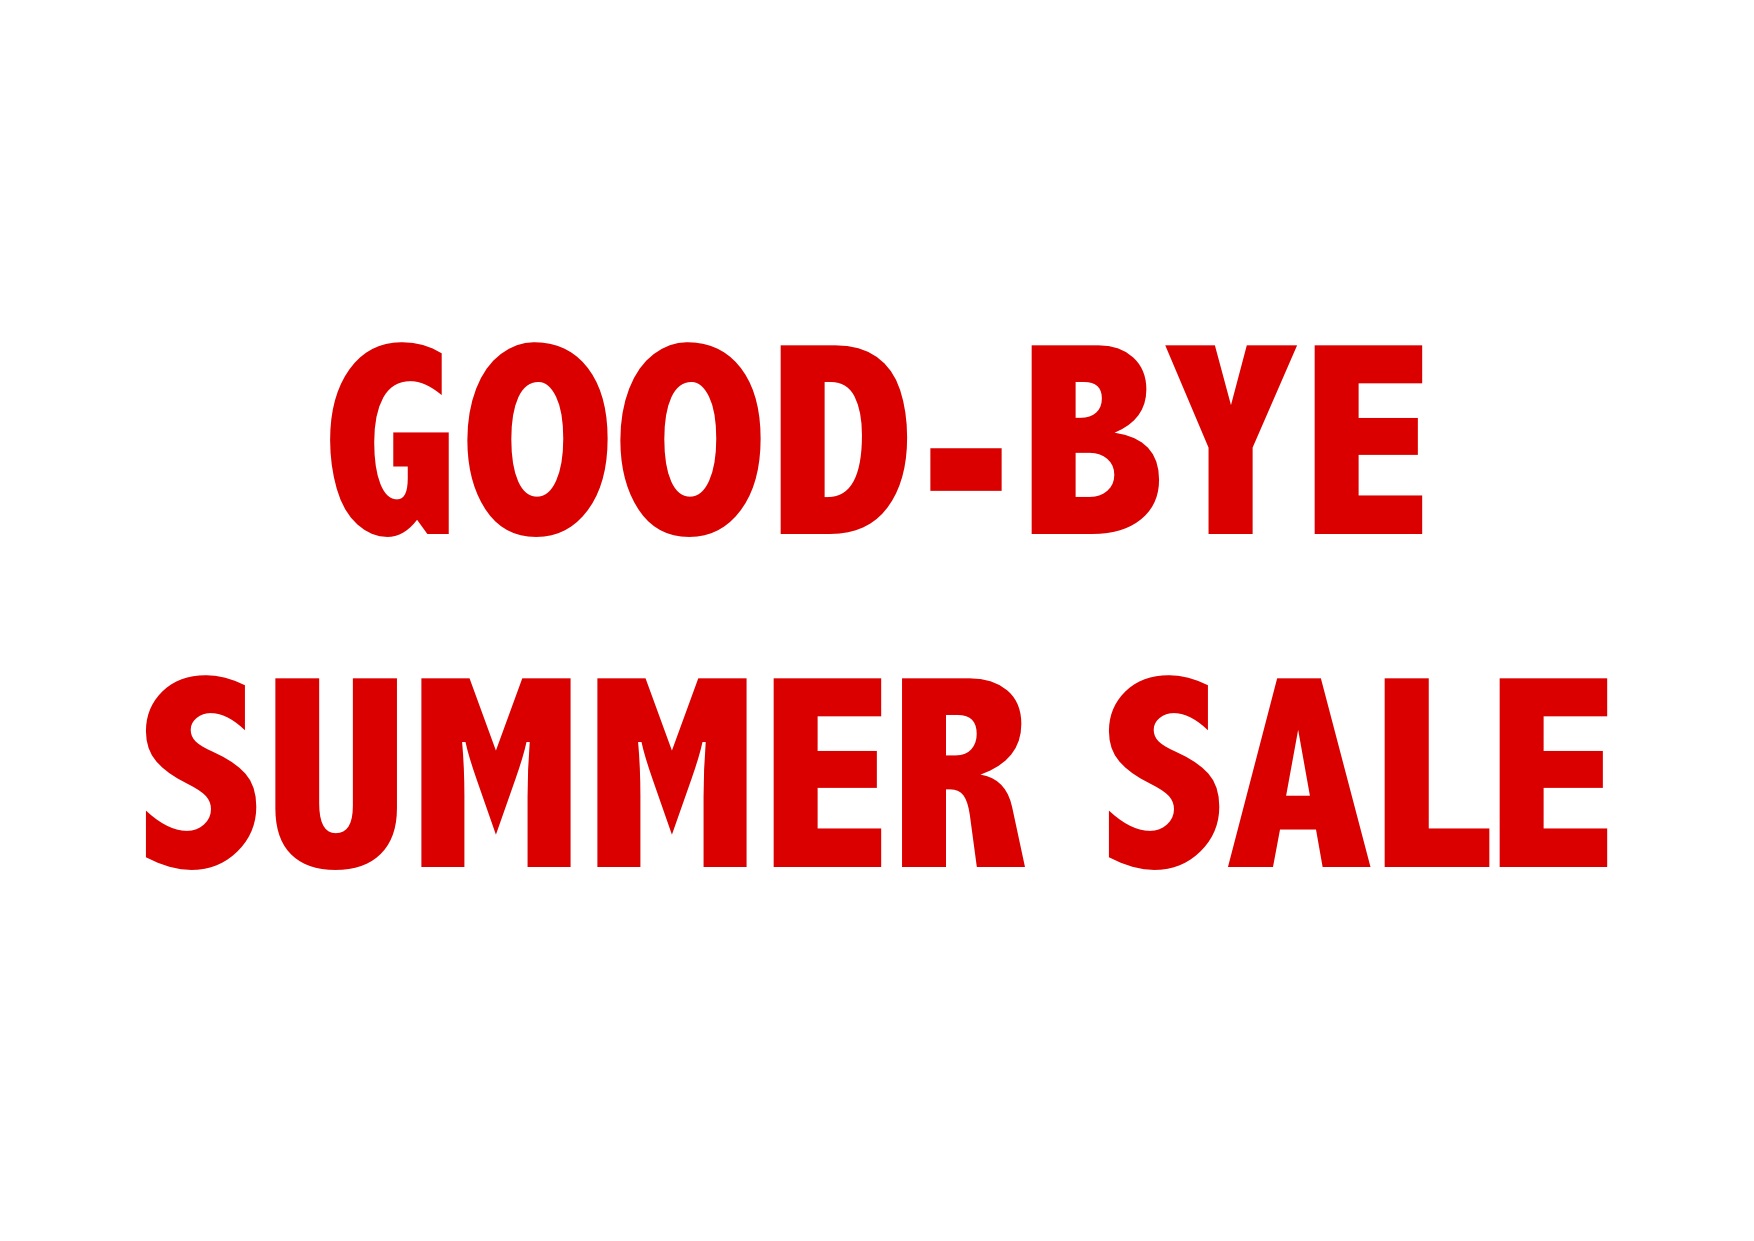 GOOD-BYE SUMMER SALE